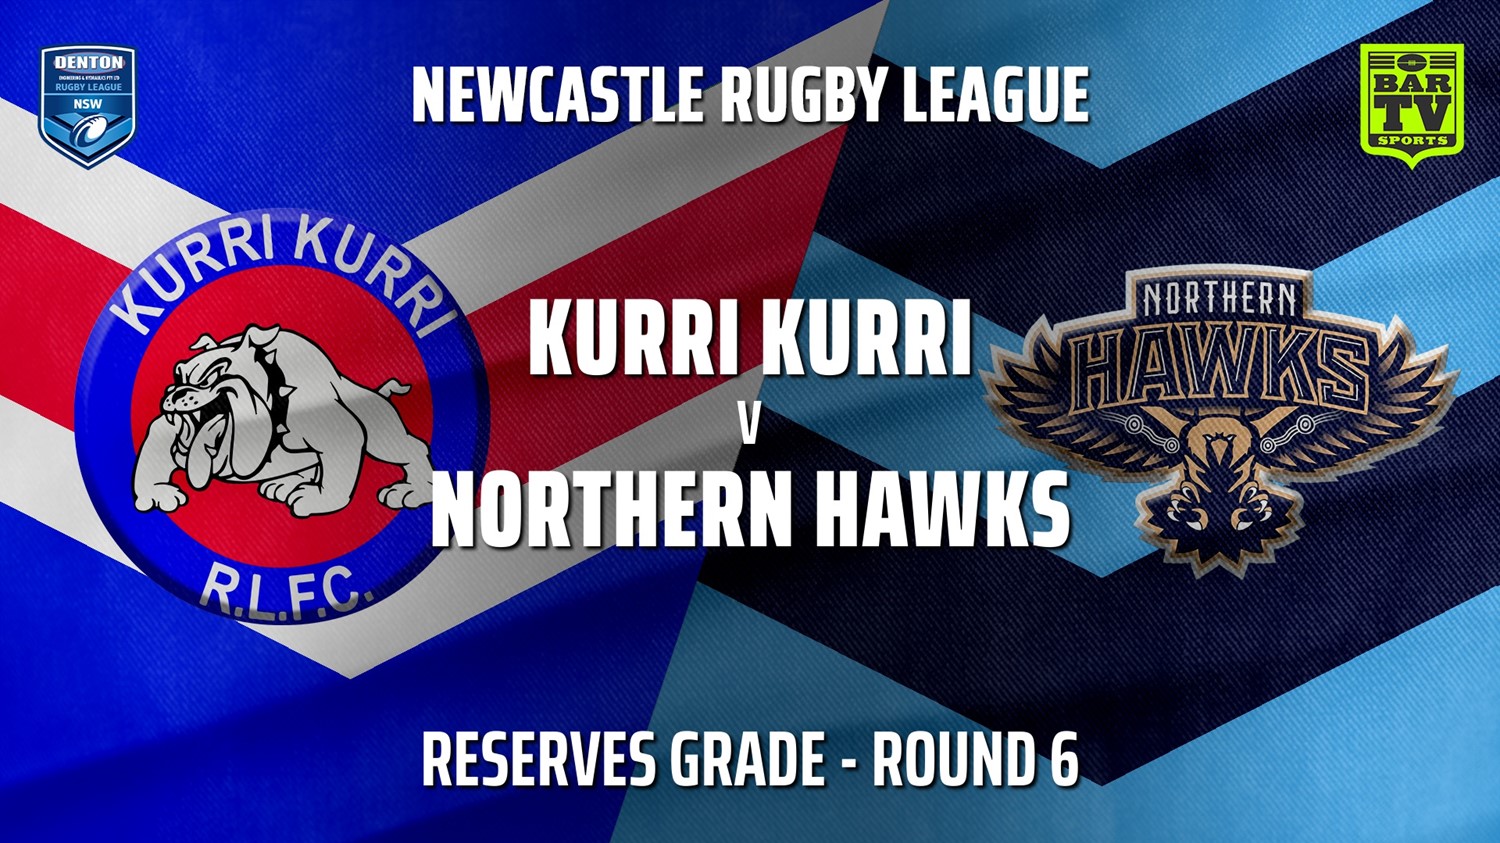 210429-Newcastle Rugby League Round 6 - Reserves Grade - Kurri Kurri Bulldogs v Northern Hawks Slate Image